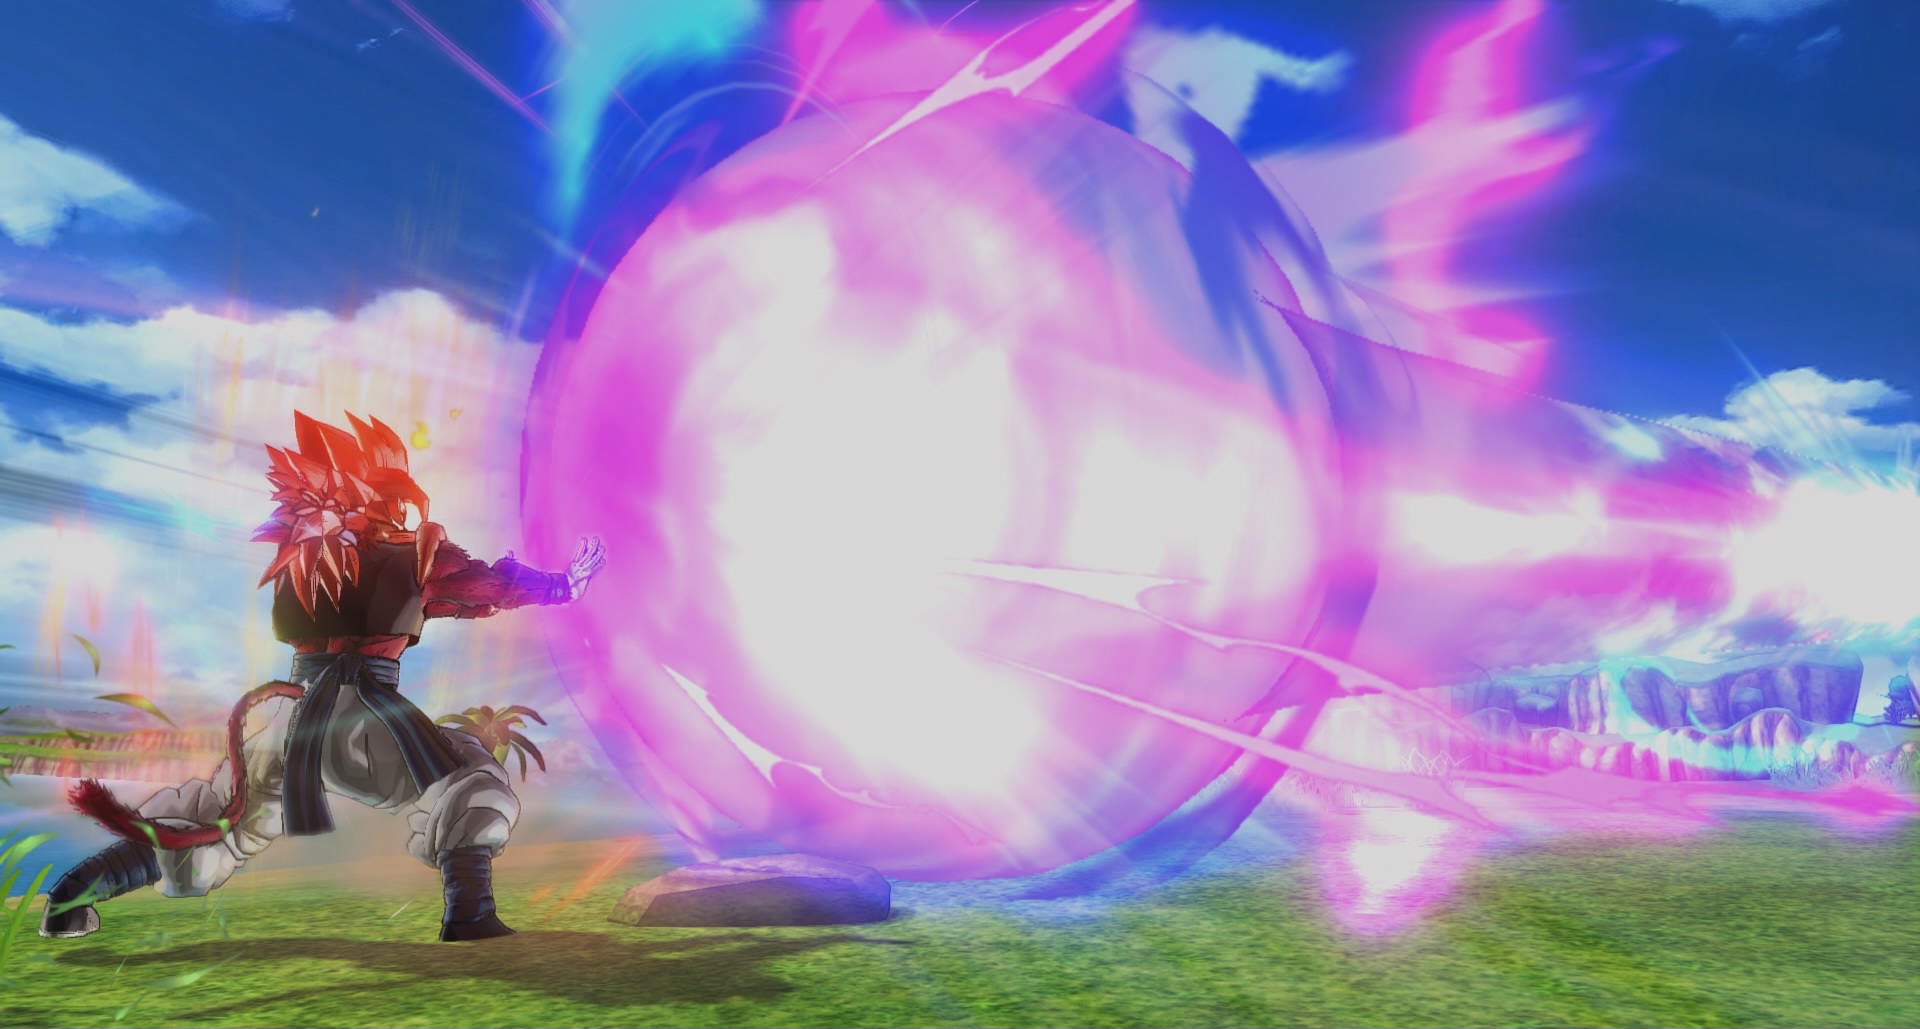 Dragon Ball in Motion - Kamehameha, Galick Gun, and Final Flash